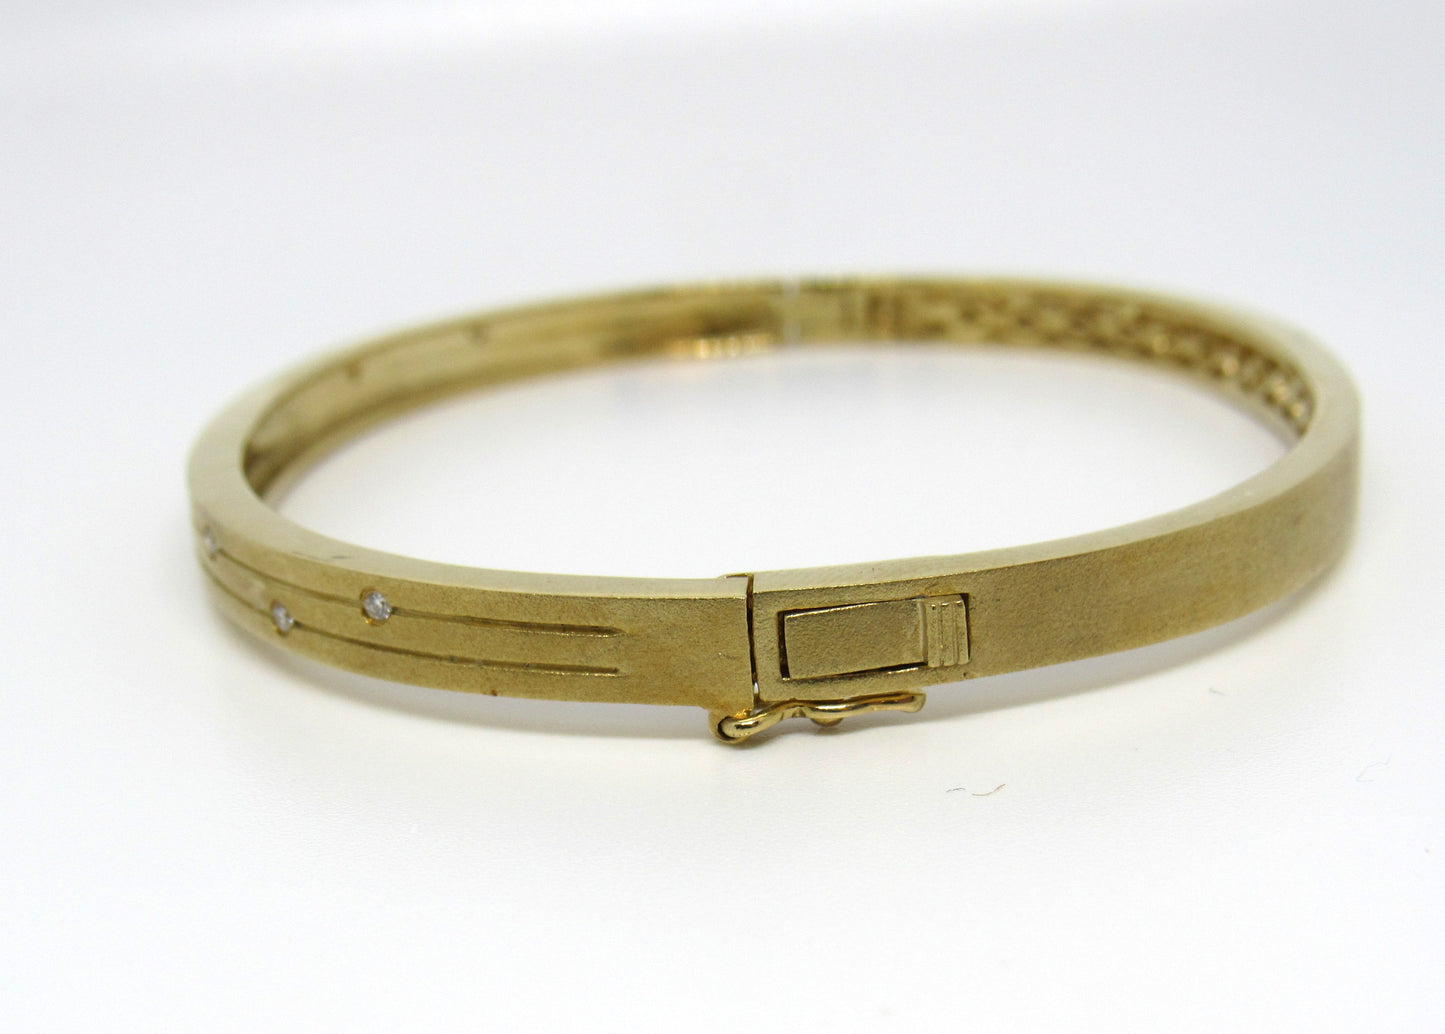 Sonia Bitton Galerie de Bijoux® 14K Gold 6.5" Diamond Bangle Bracelet